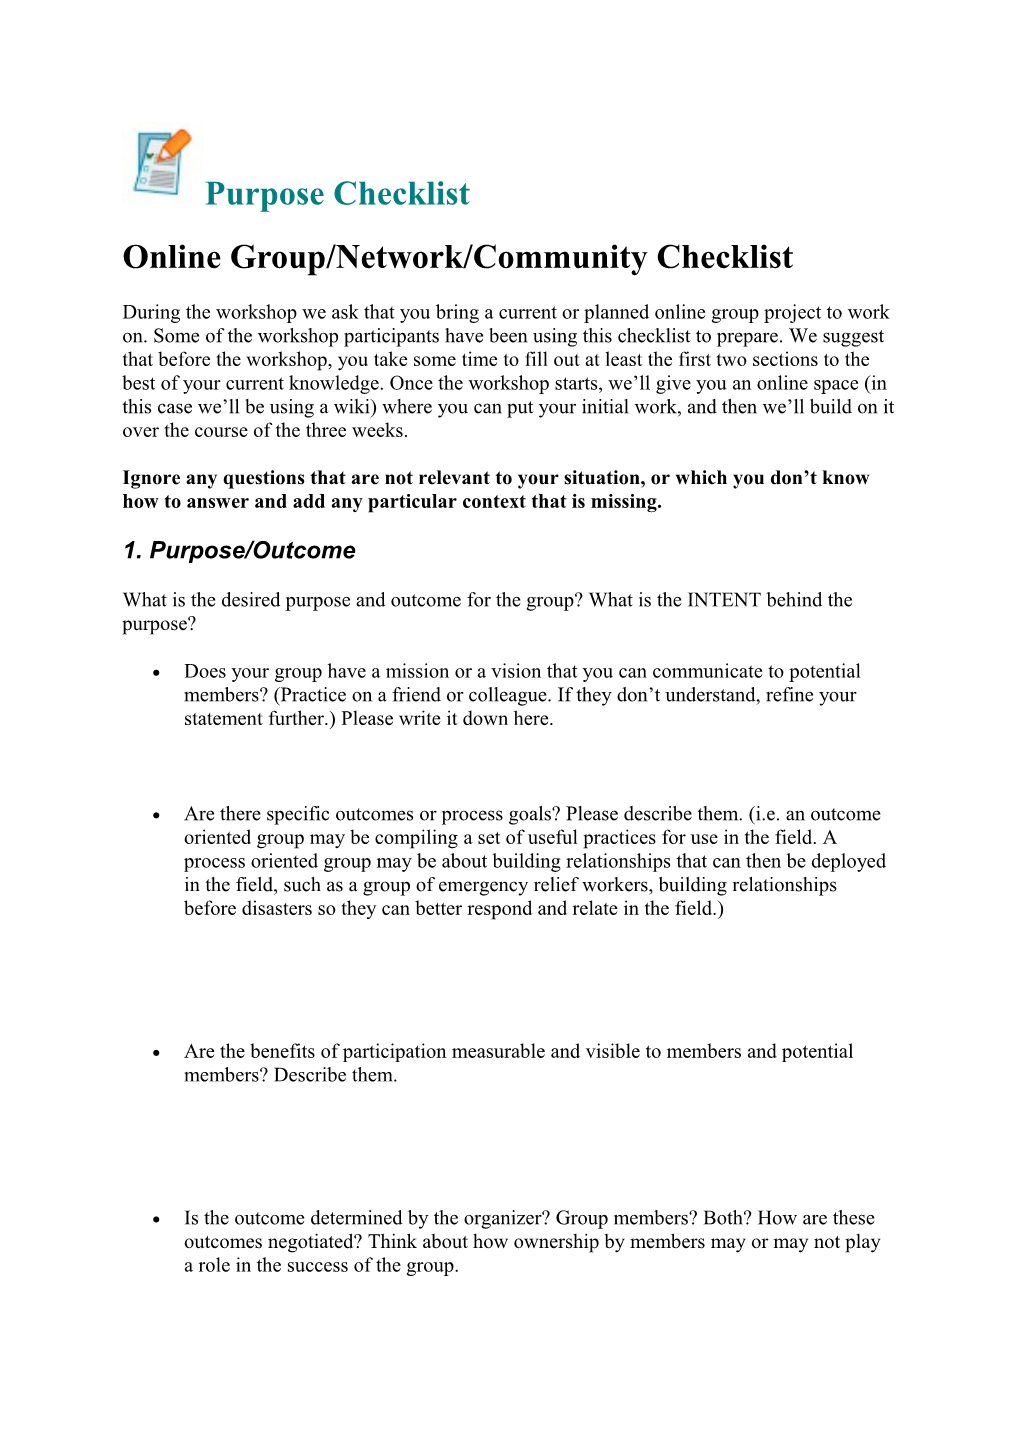 Online Group/Network/Community Checklist